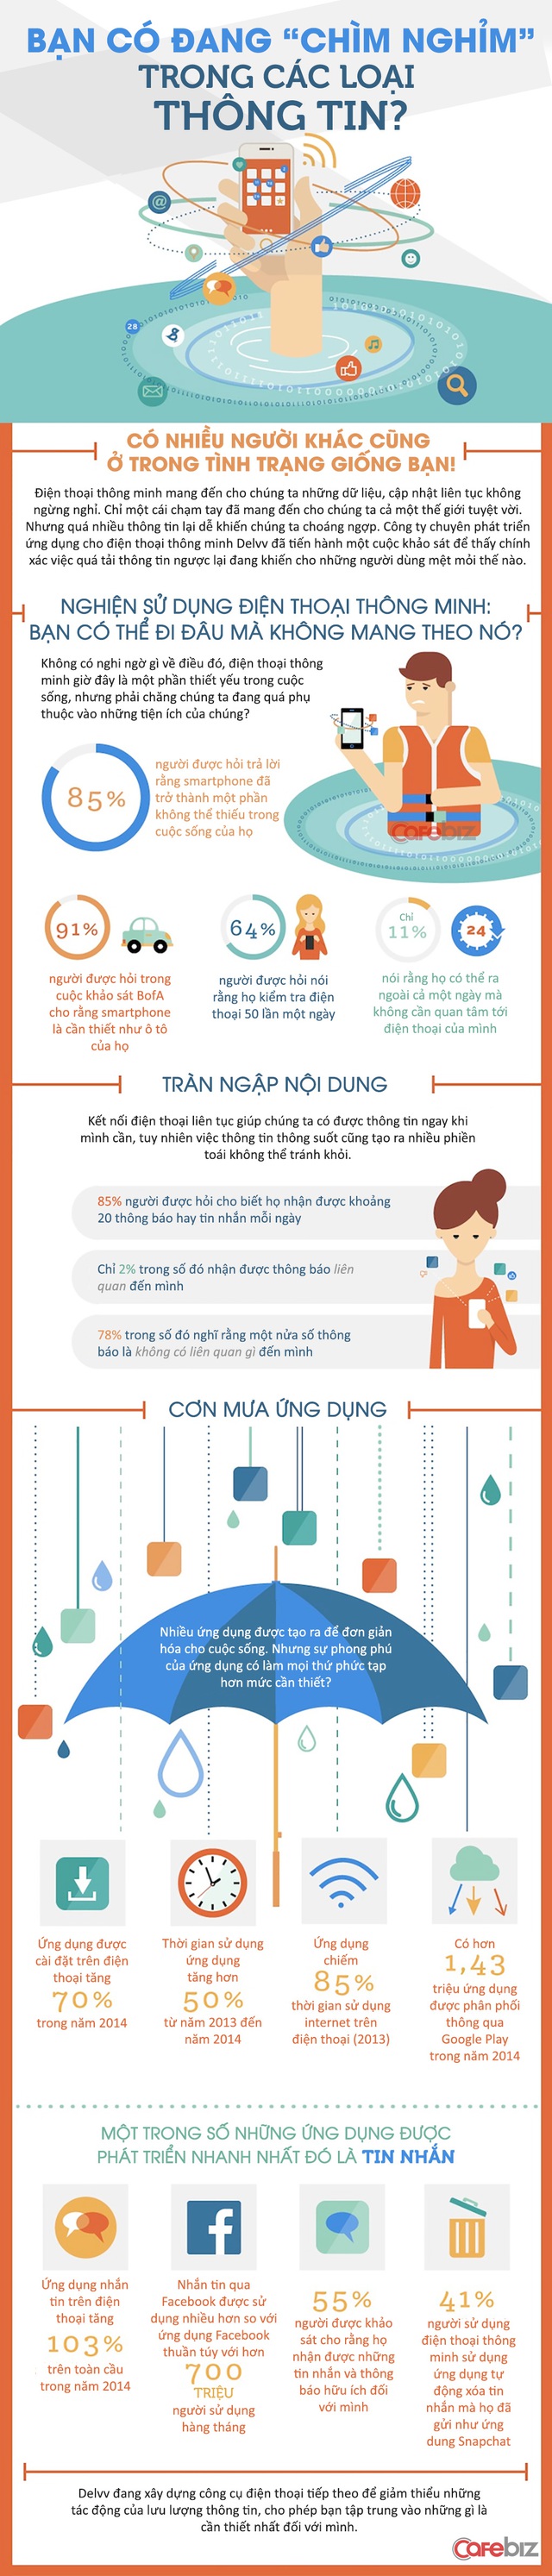 infographic-dien-thoai-cang-thong-minh-thi-con-nguoi-cang-met-moi.jpg